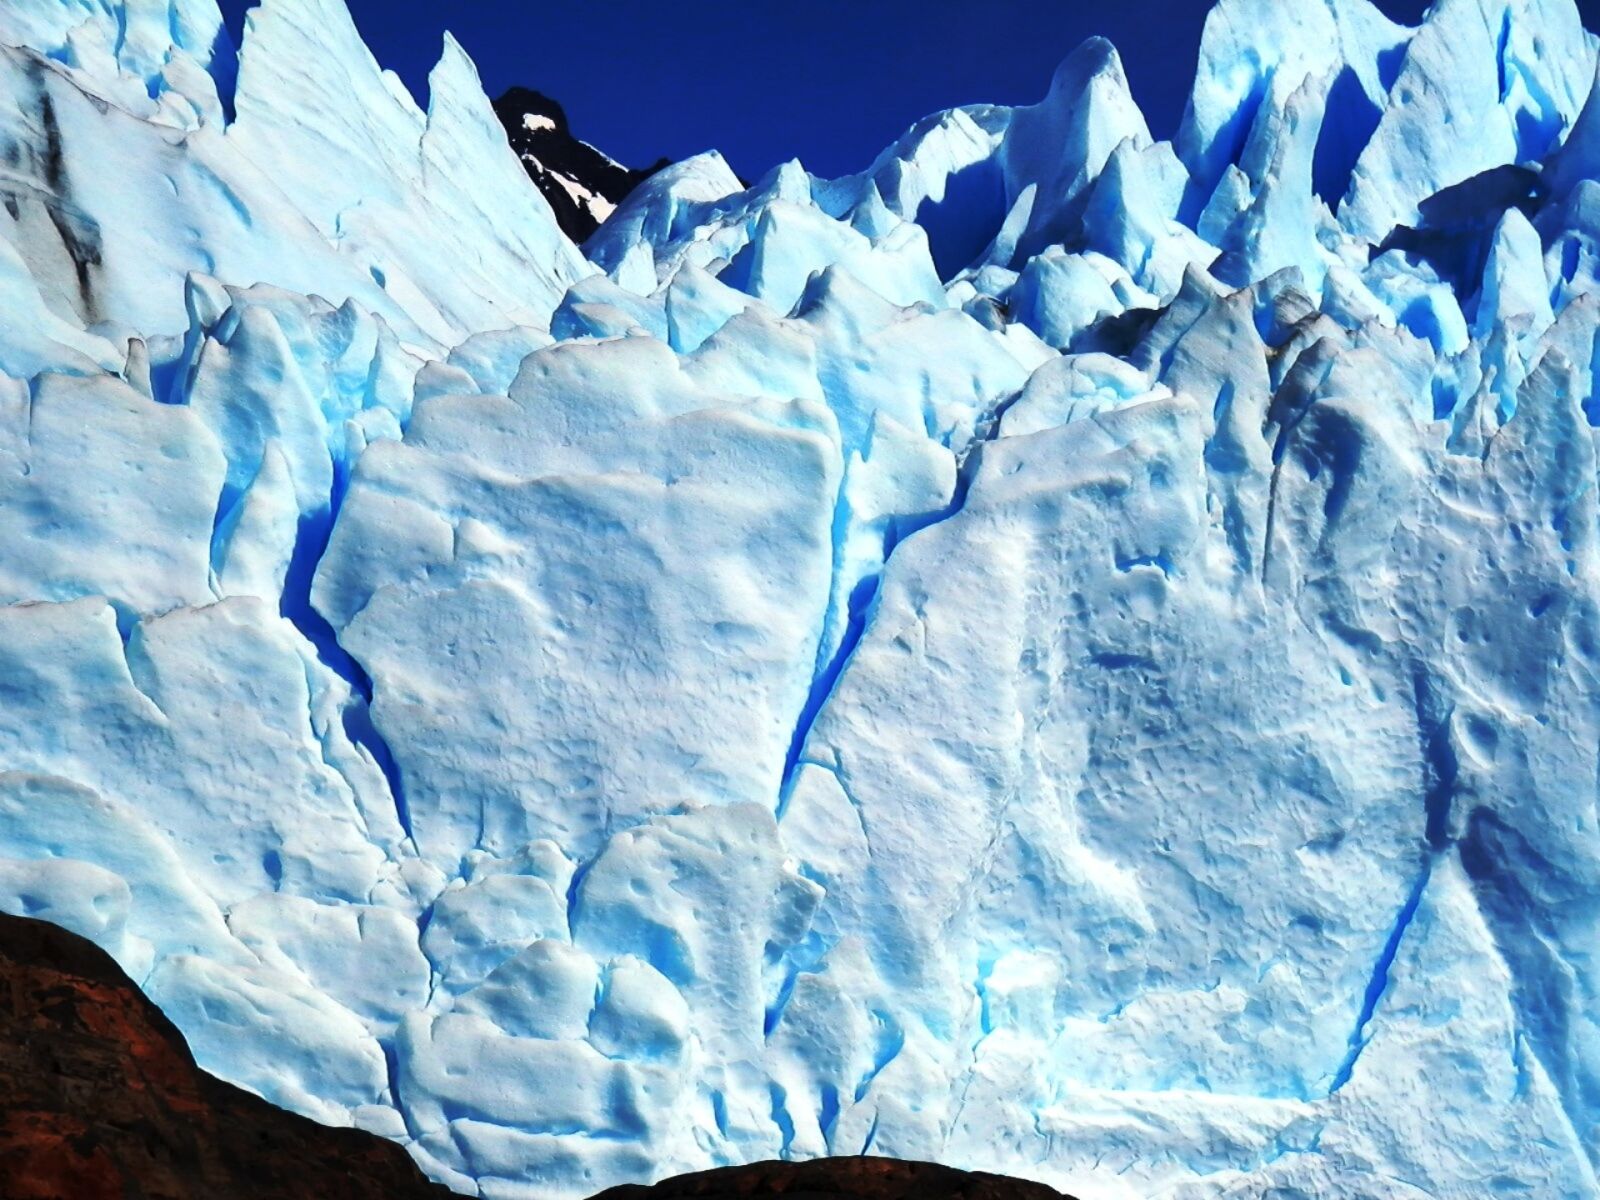 Olympus SZ-14 sample photo. Glacier, perito moreno, argentina photography